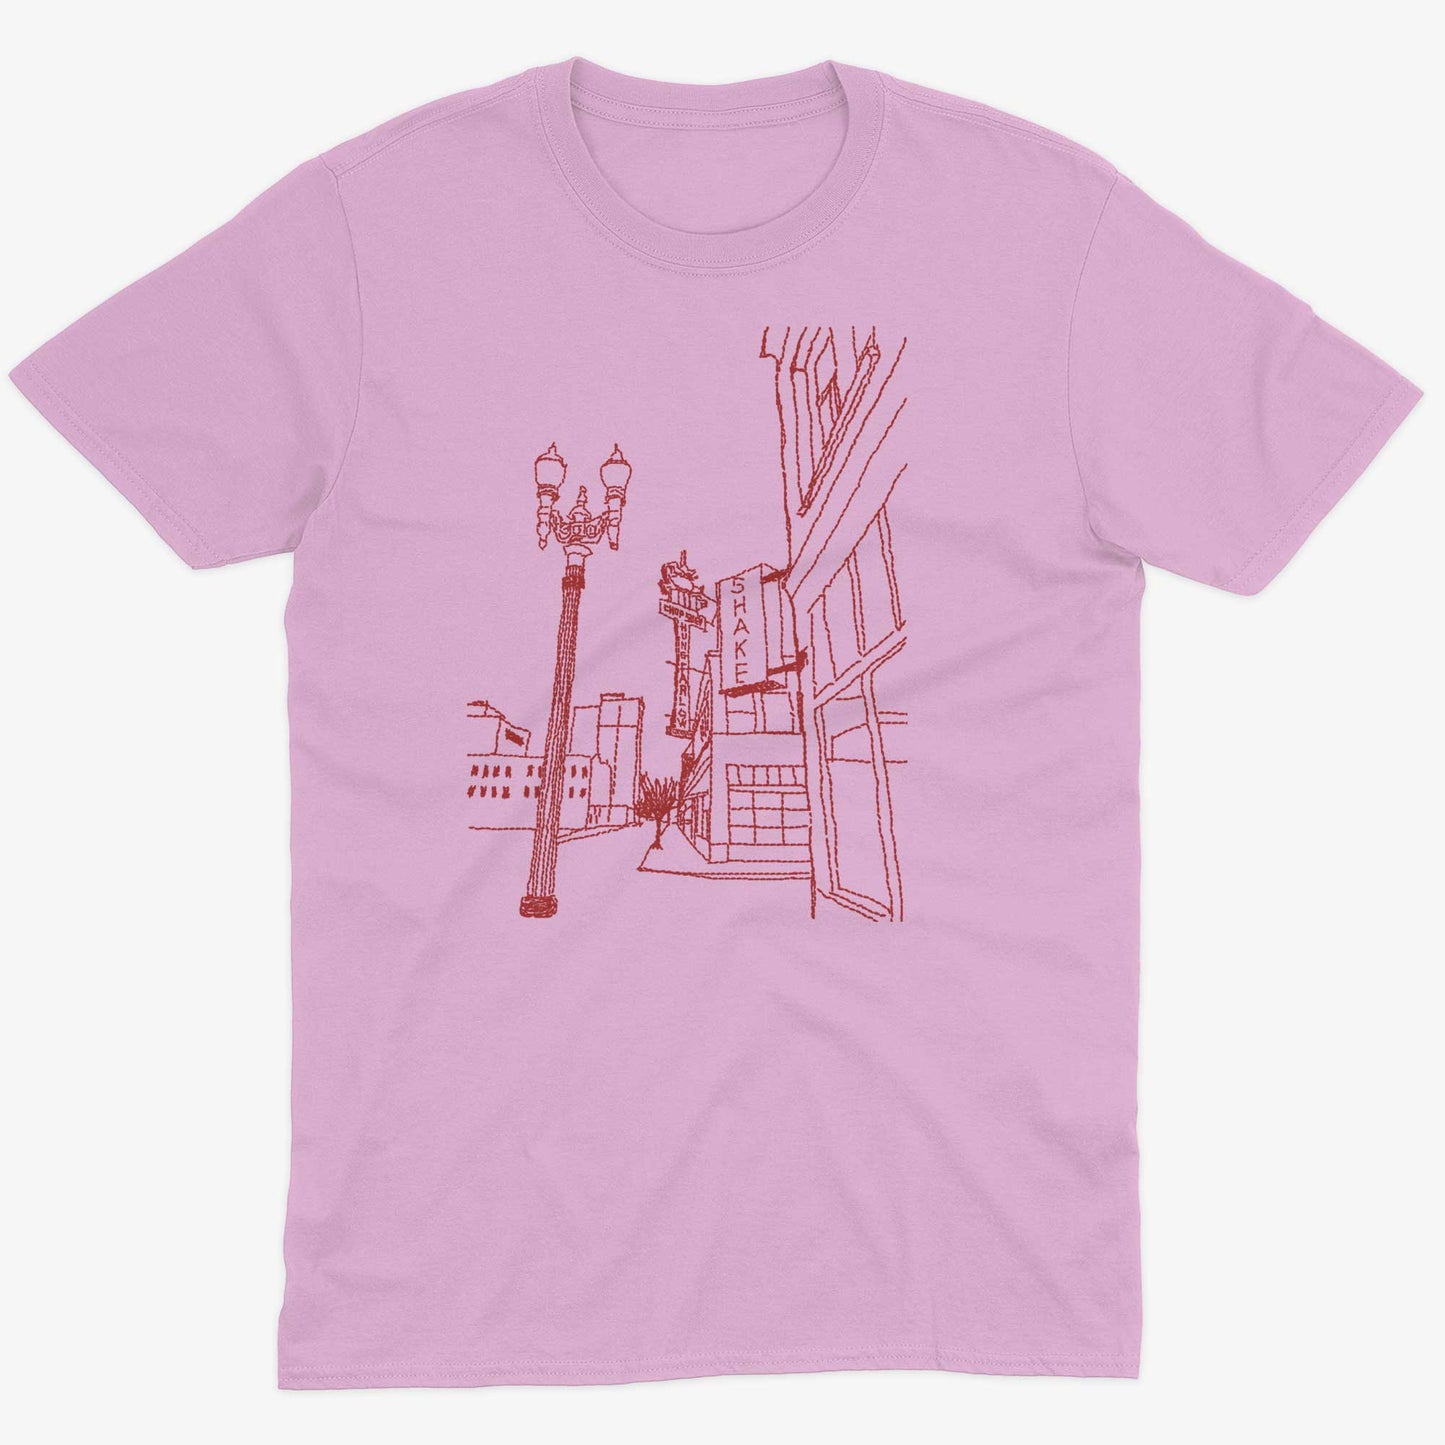 Hung Far Low Restaurant Unisex Or Women's Cotton T-shirt-Pink-Unisex